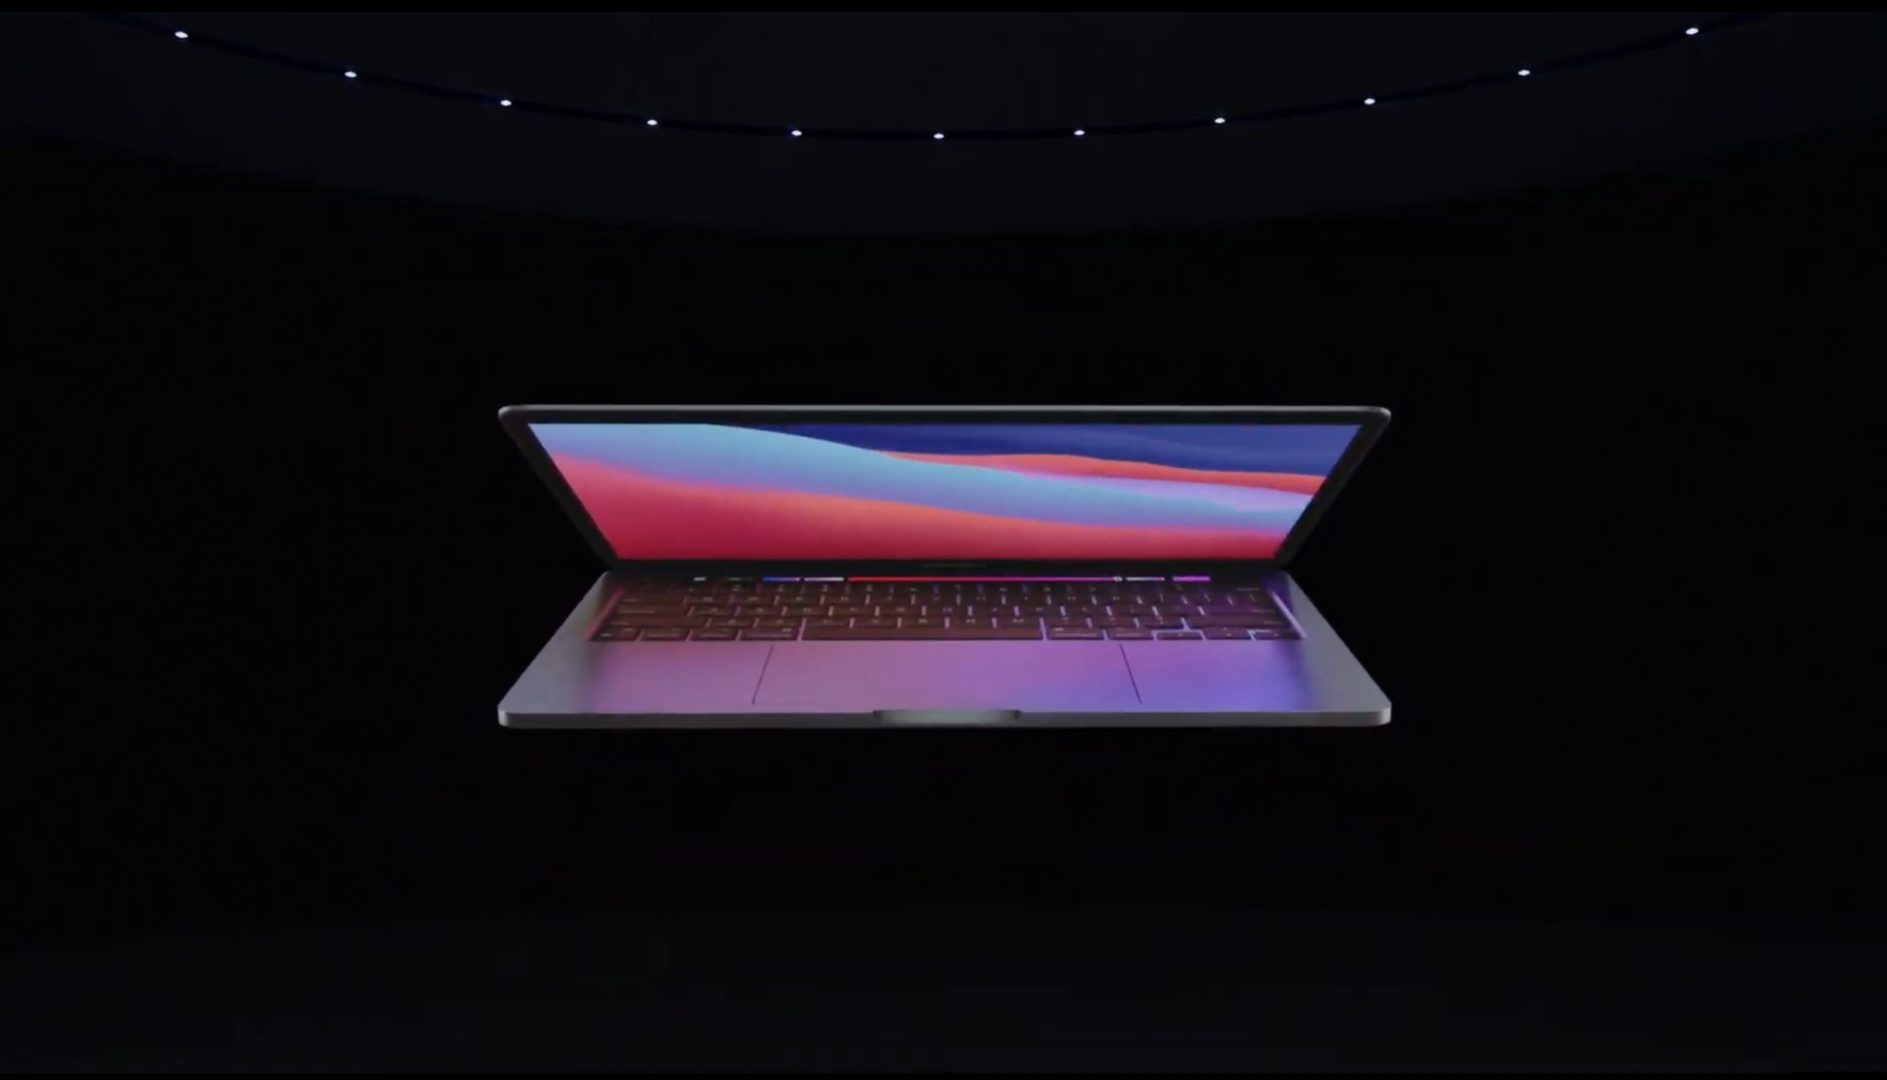 Apple's New MacBook Pro laptop